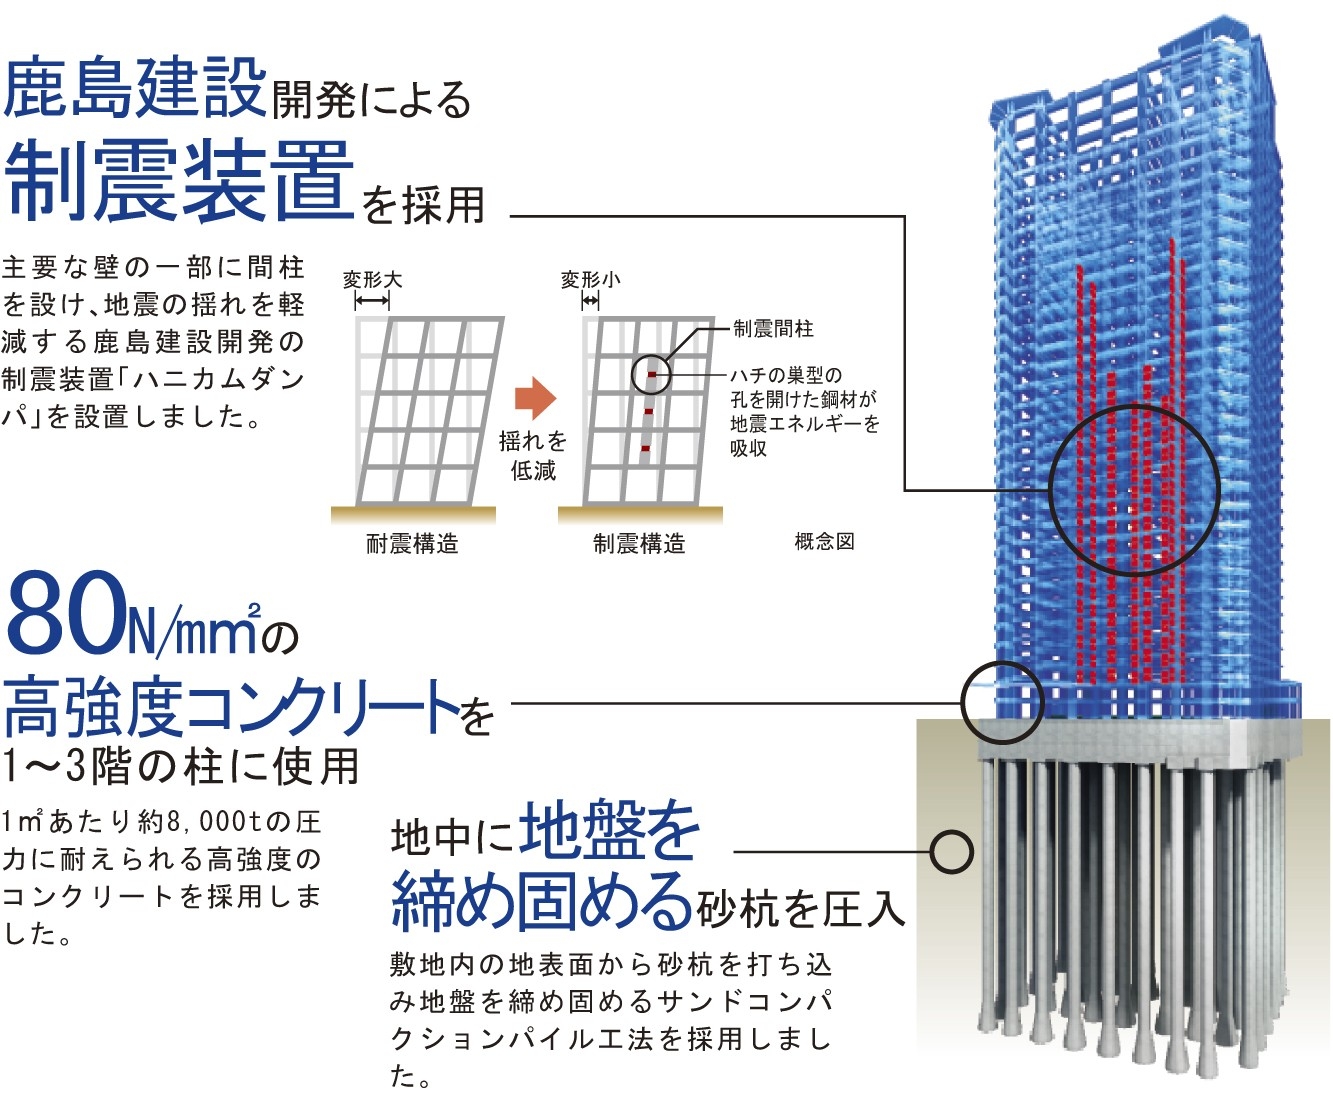 Building structure. Construction is Kajima (damping structure conceptual diagram)